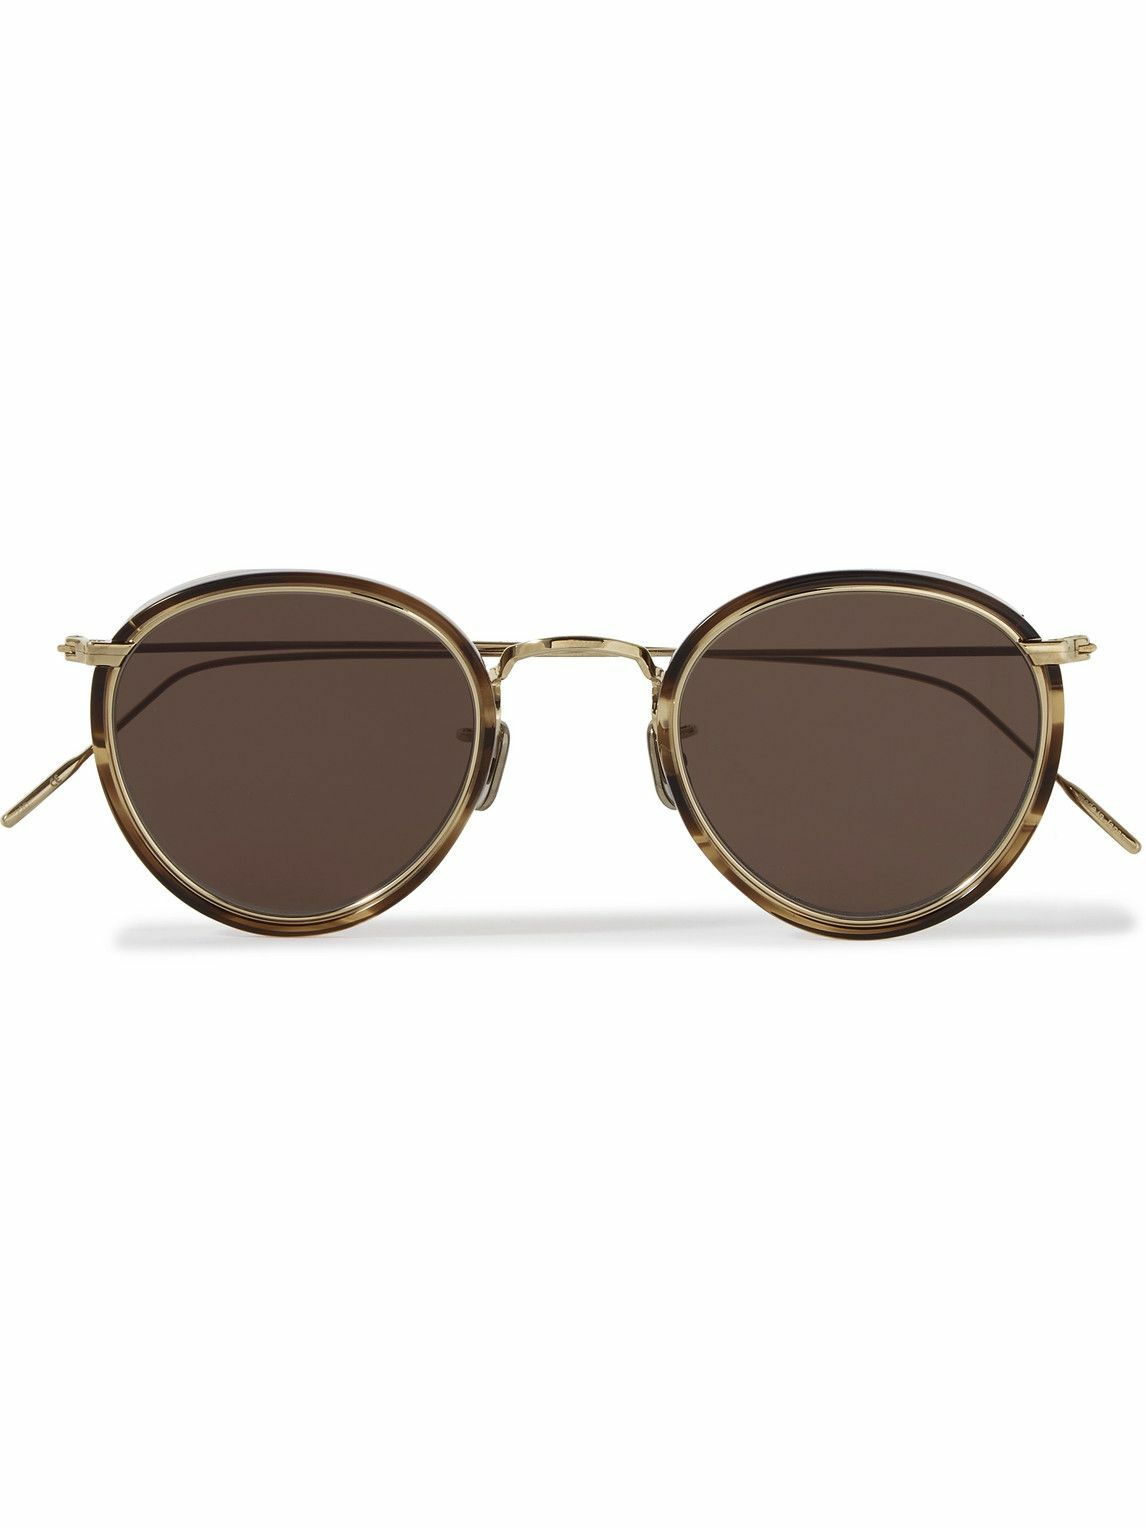 Eyevan 7285 - Round-Frame Acetate and Silver-Tone Sunglasses Eyevan 7285